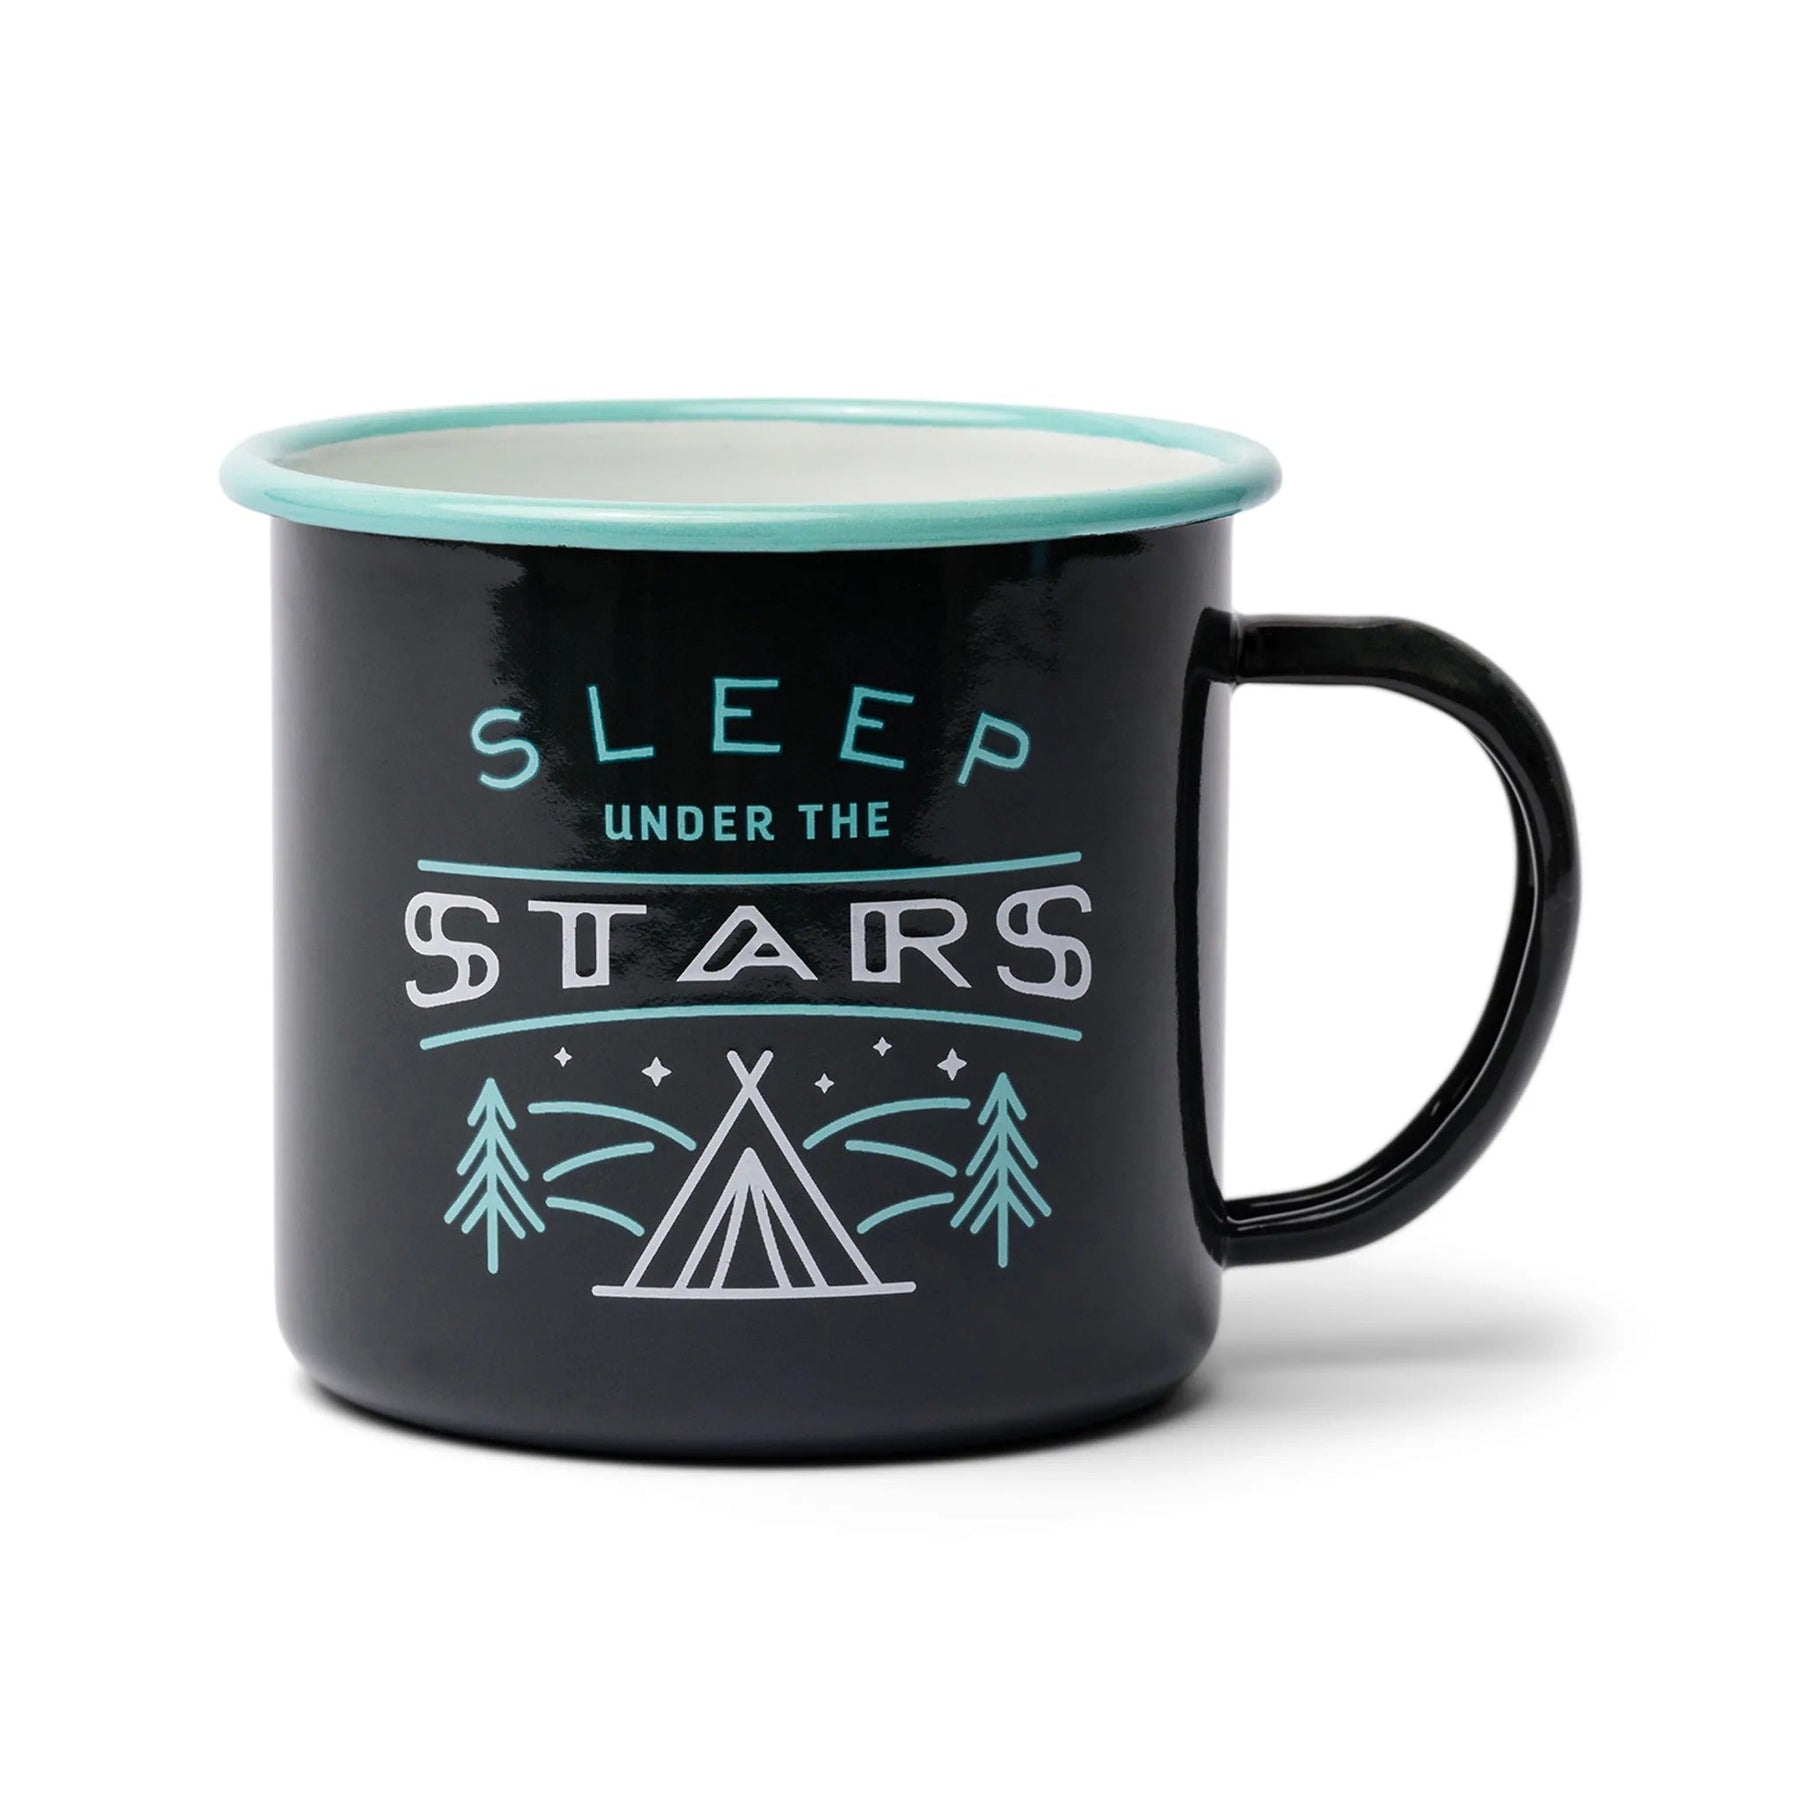 Gentlemen's Hardware Enamel Mug - Sleep Under The Stars